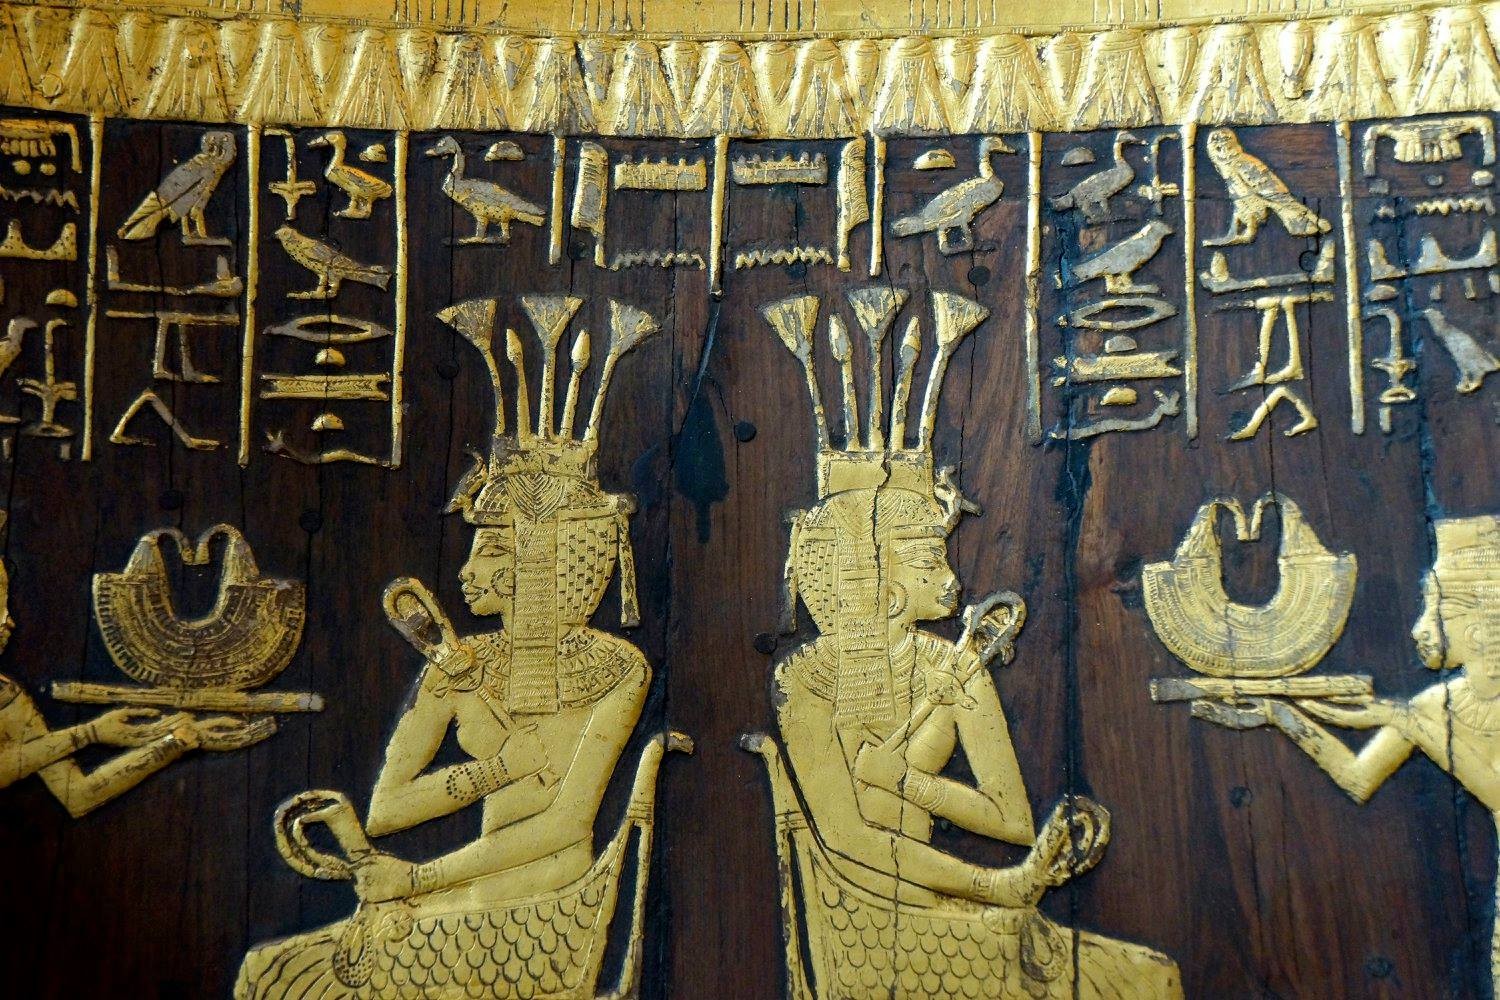 The throne of princess Sitamun, daughter of Pharaoh Amenhotep III.